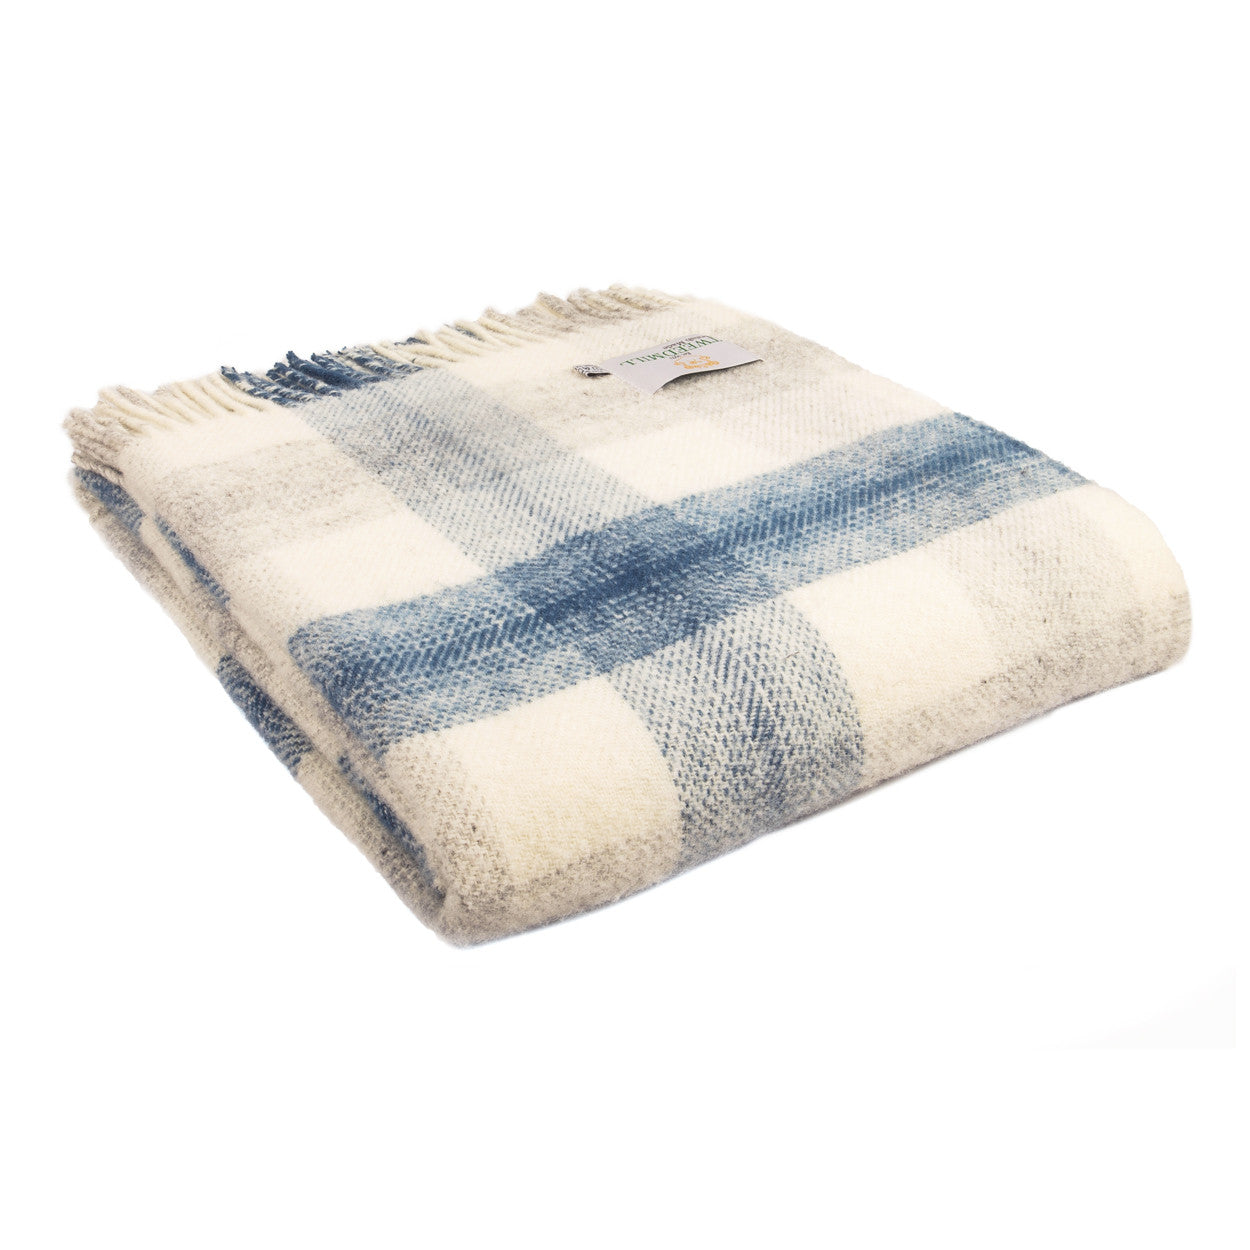 Tweedmill blue cream and grey Meadow check Wool throw blanket